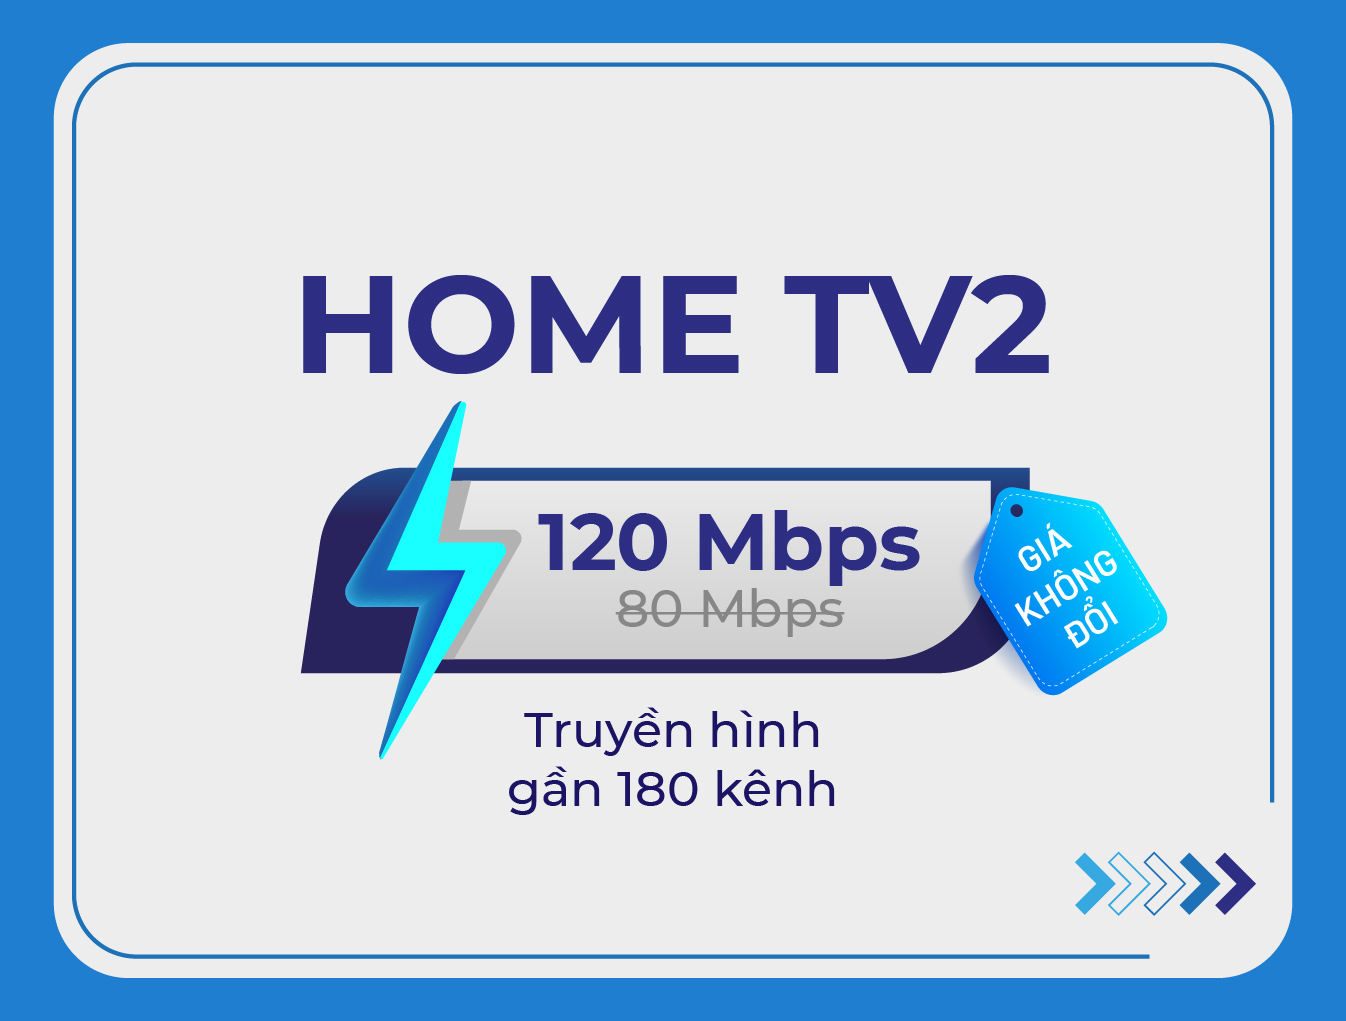 Home TV2